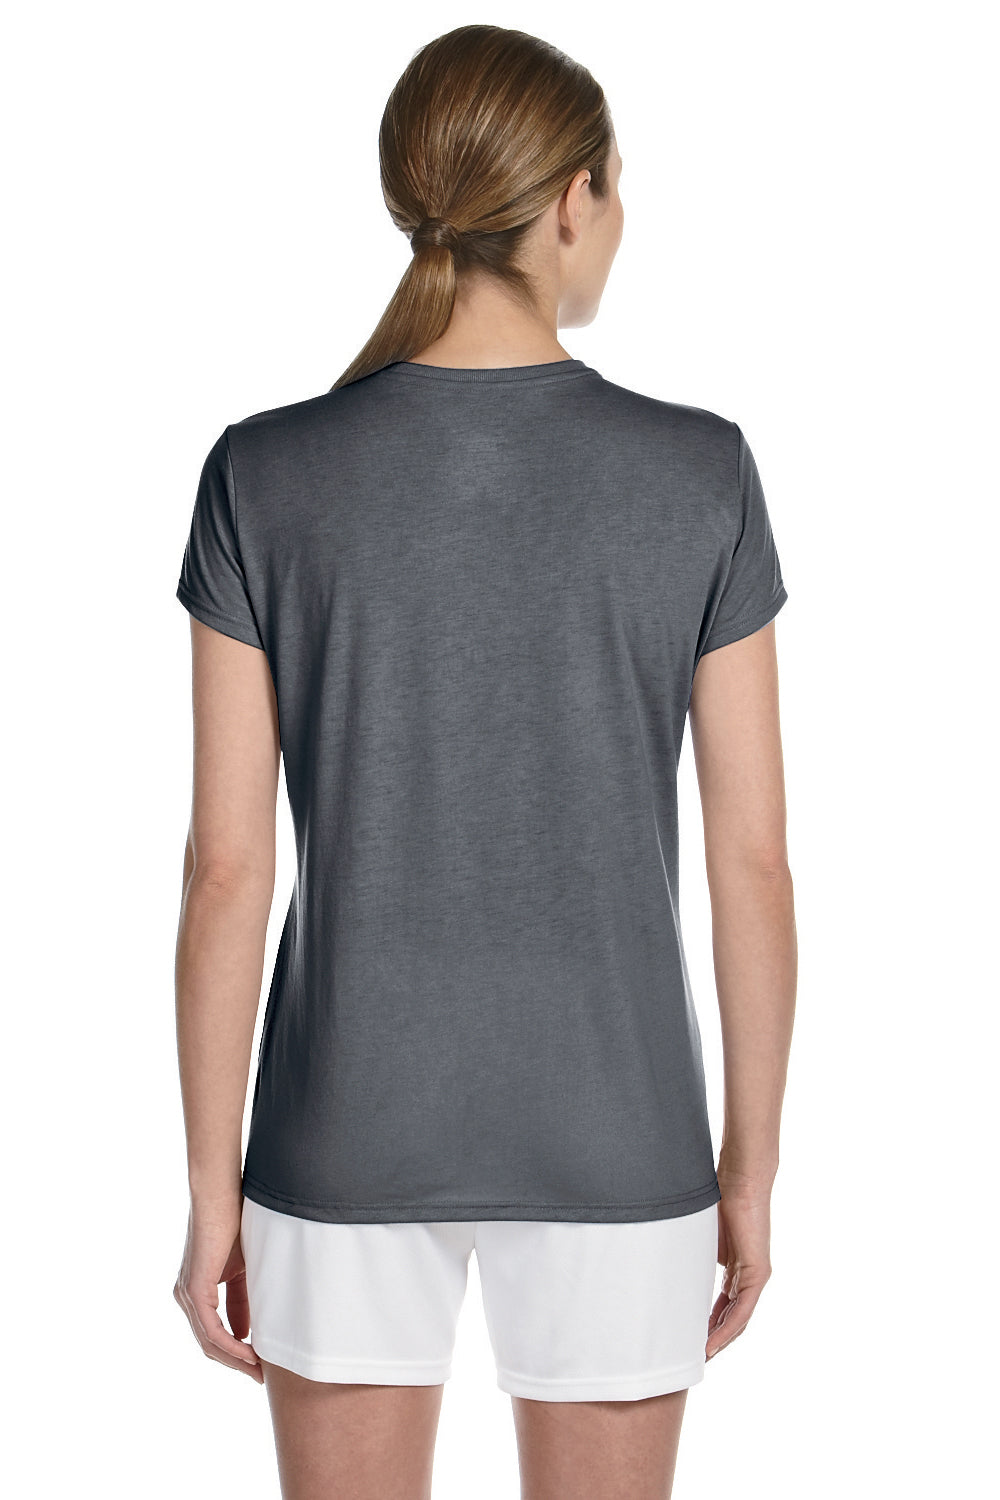 Gildan G420L Womens Performance Jersey Moisture Wicking Short Sleeve Crewneck T-Shirt Charcoal Grey Back